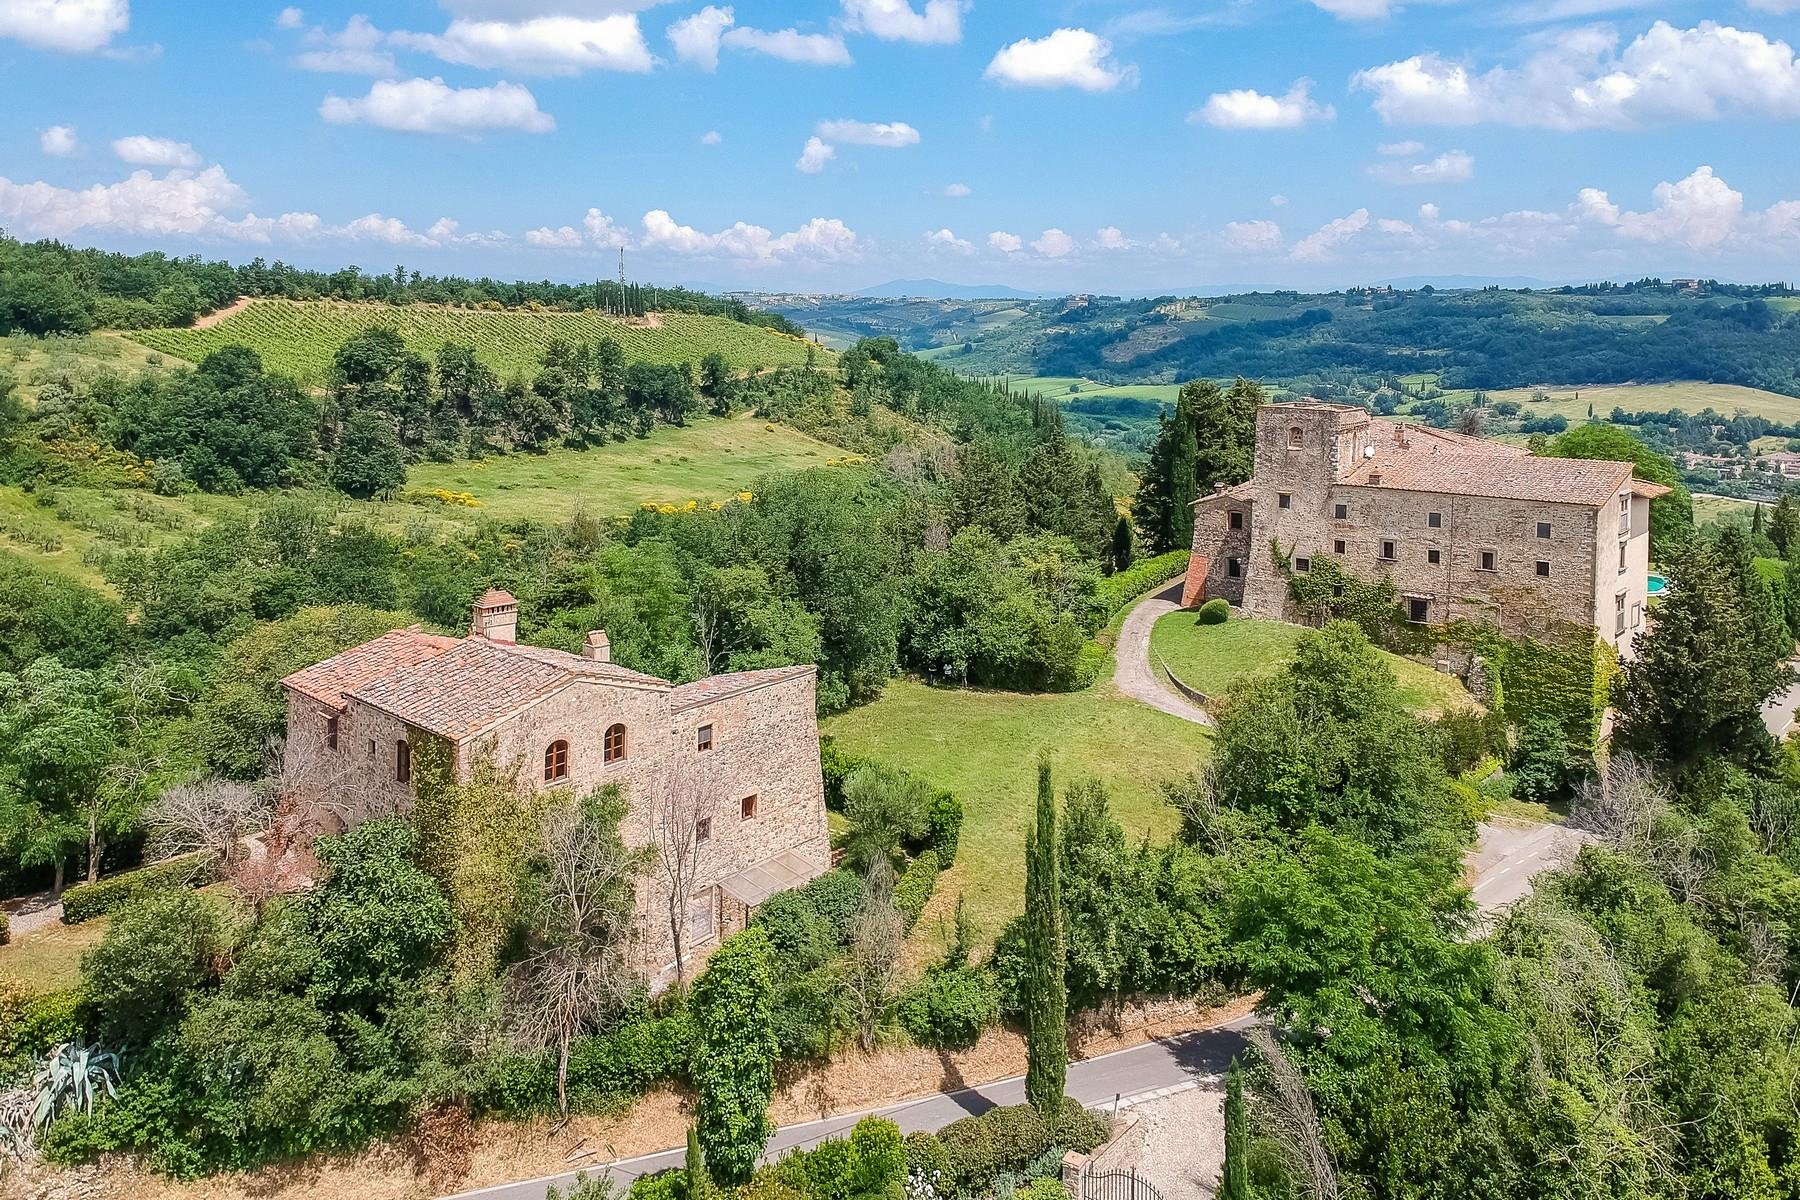 Francis York Medieval Castle Turned Renaissance Villa in Tuscany, Italy  00032.jpg